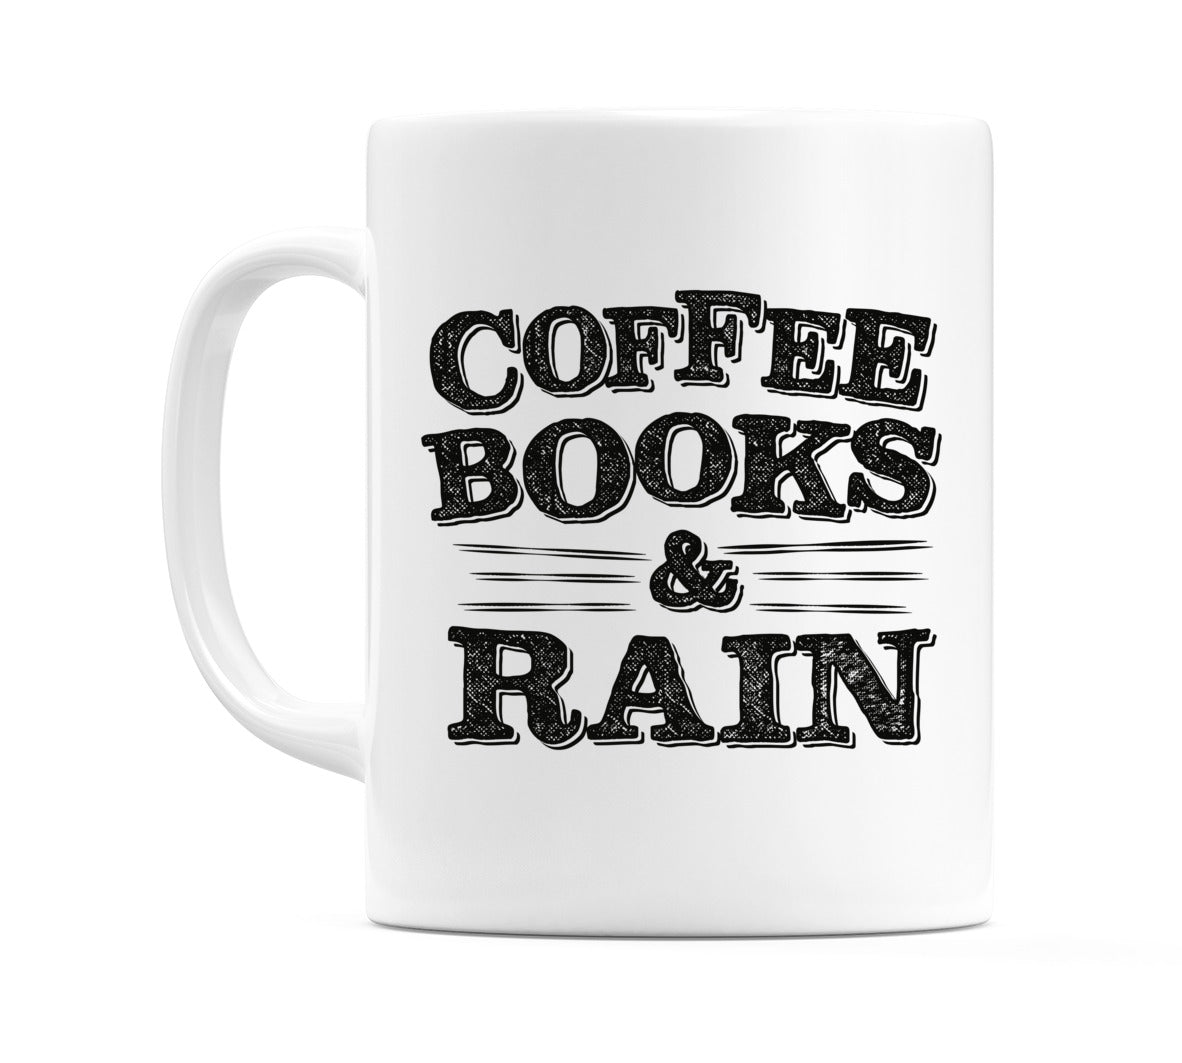 Coffee Books & Rain Mug